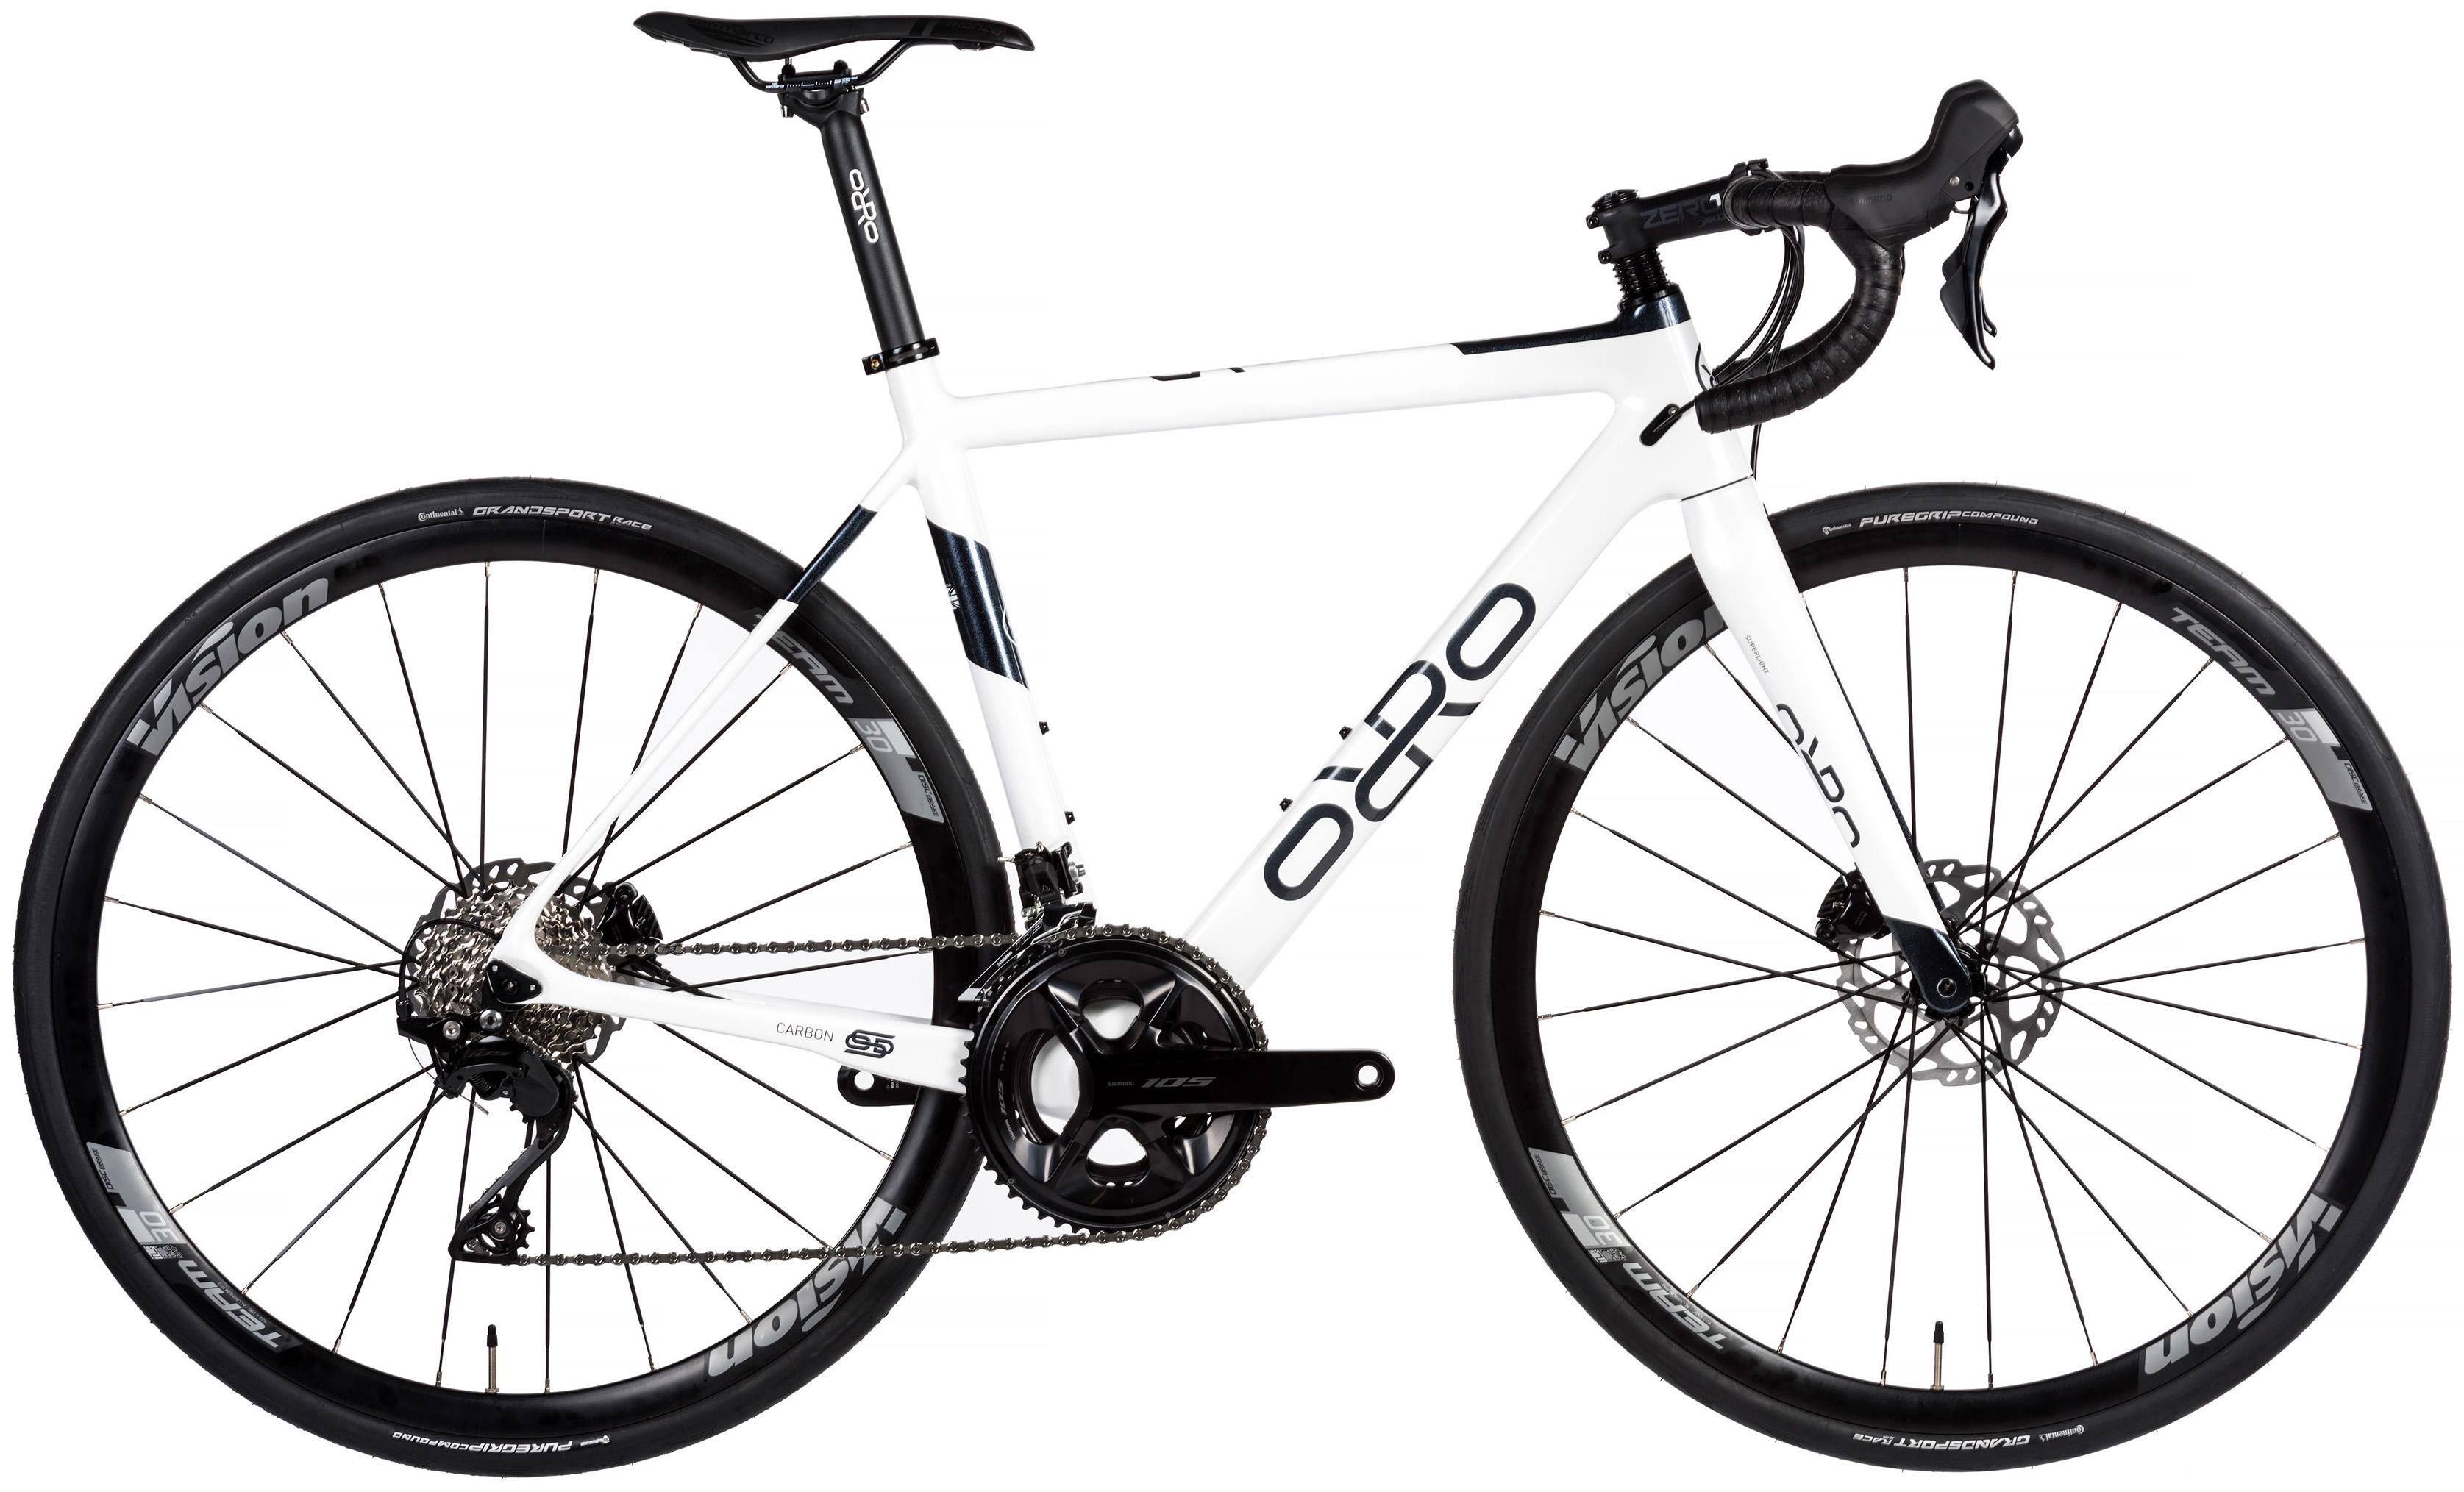 Orro Gold Evo 105 Hydro Team30 Carbon Road Bike - White/gloss